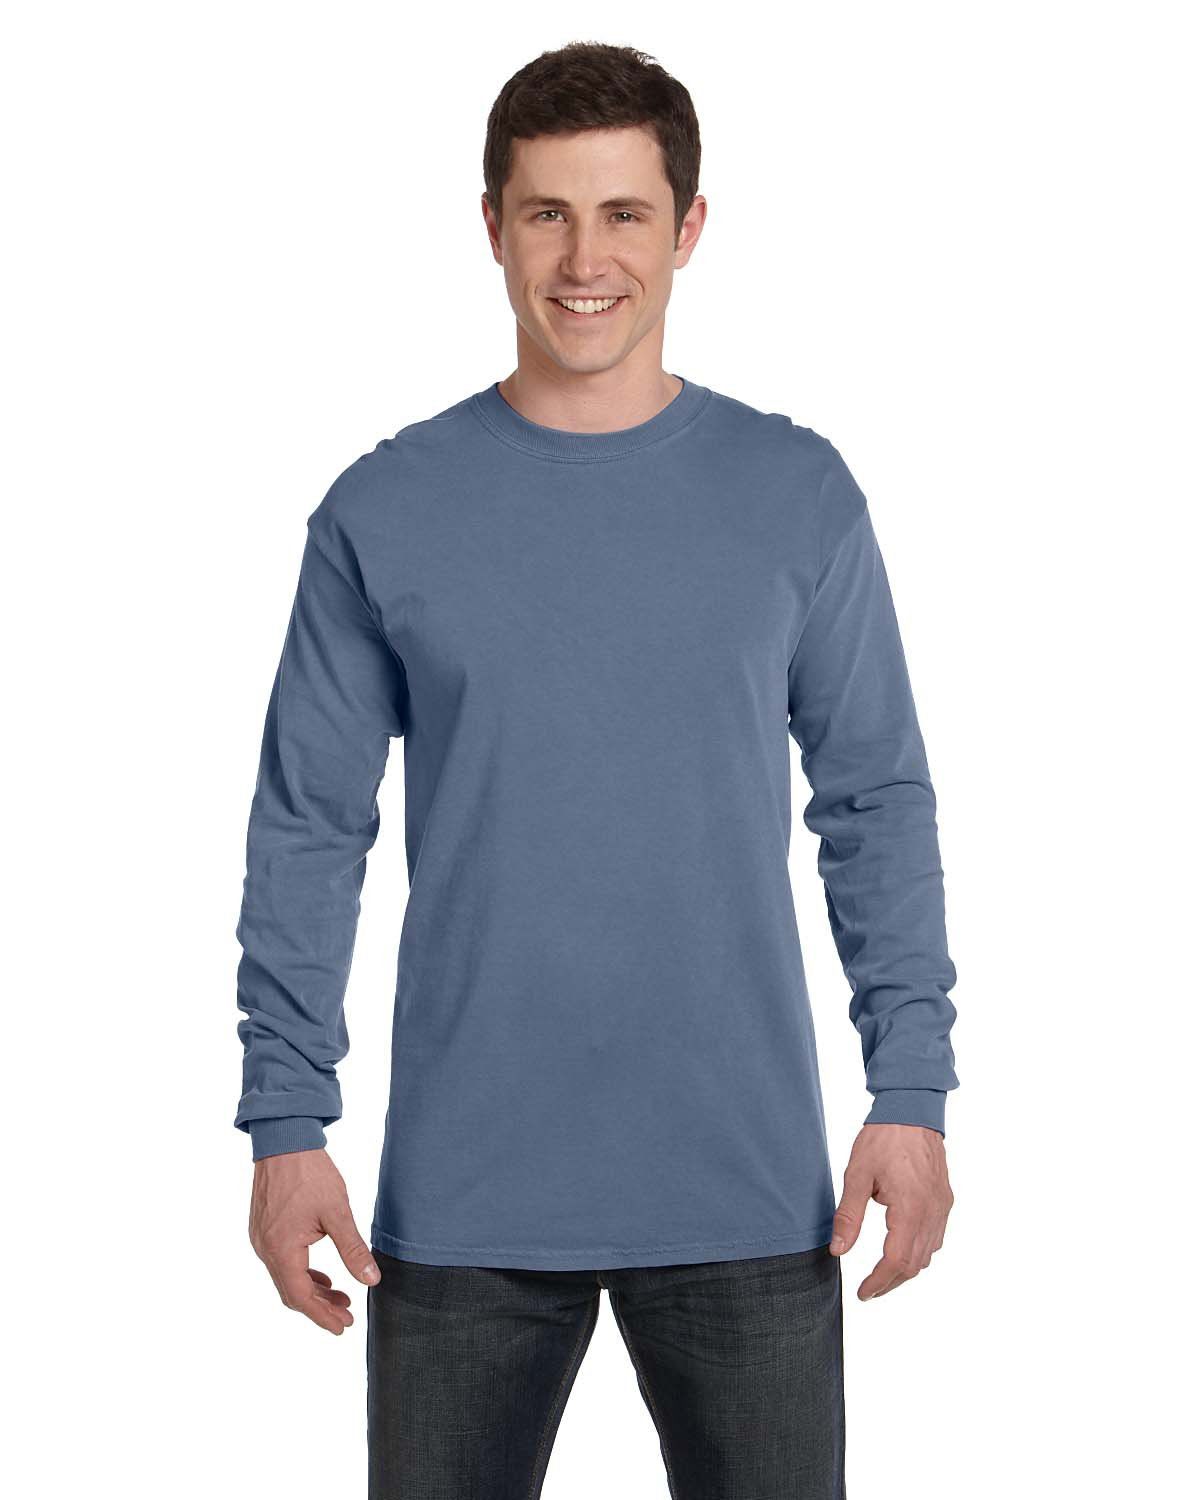 Comfort Colors Sweatshirt Size Chart